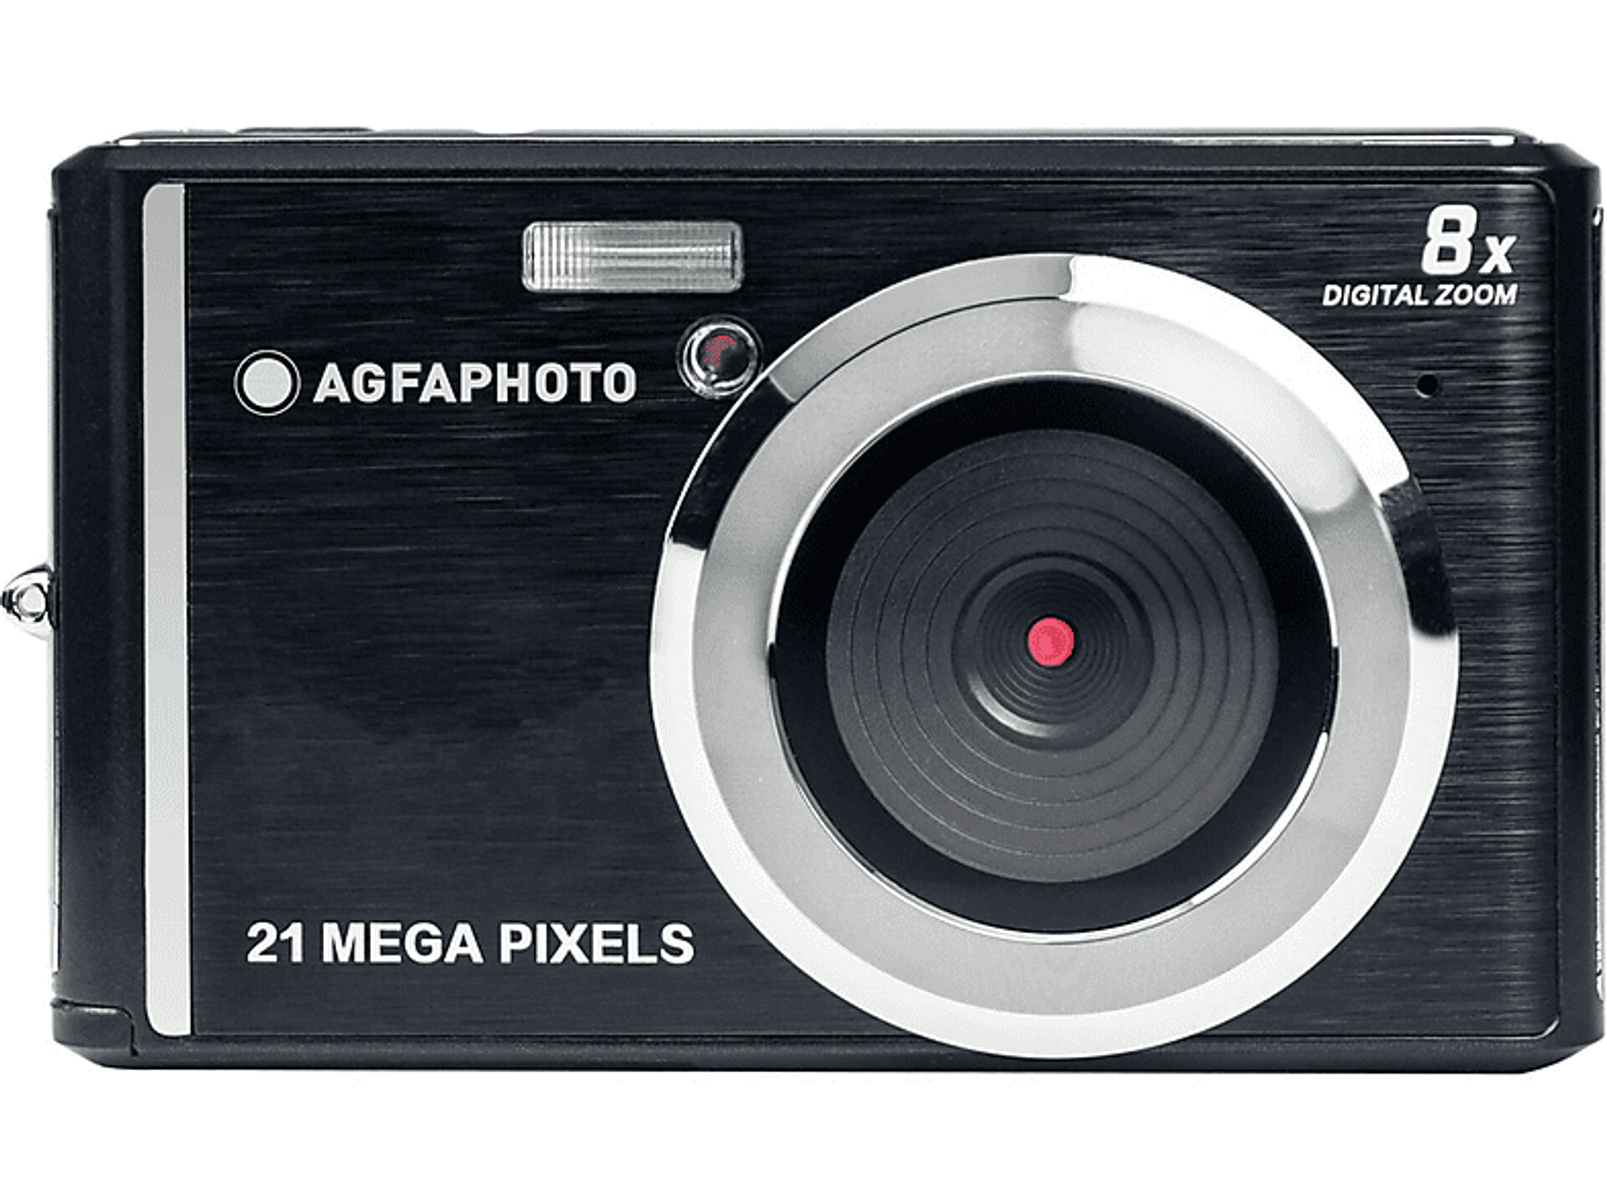 AGFAPHOTO Compact opt. DC5200 8 TFT schwarz, Display- Digitalkamera x Cam Zoom, LCL